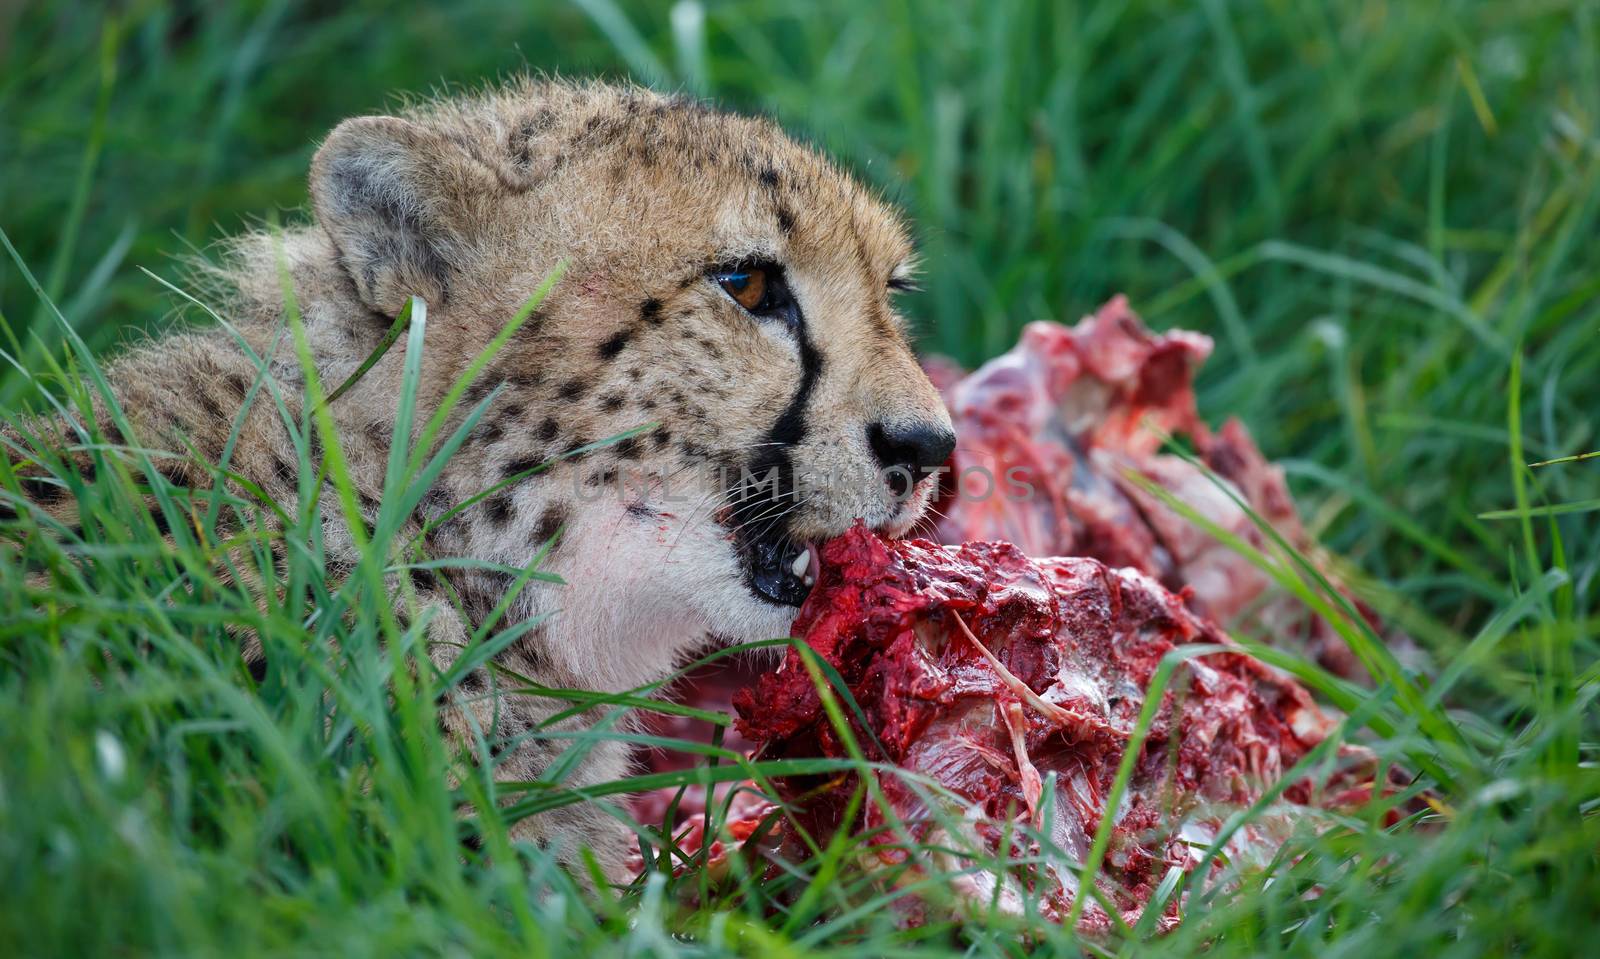 Cheetah Wild Cat Eating by fouroaks